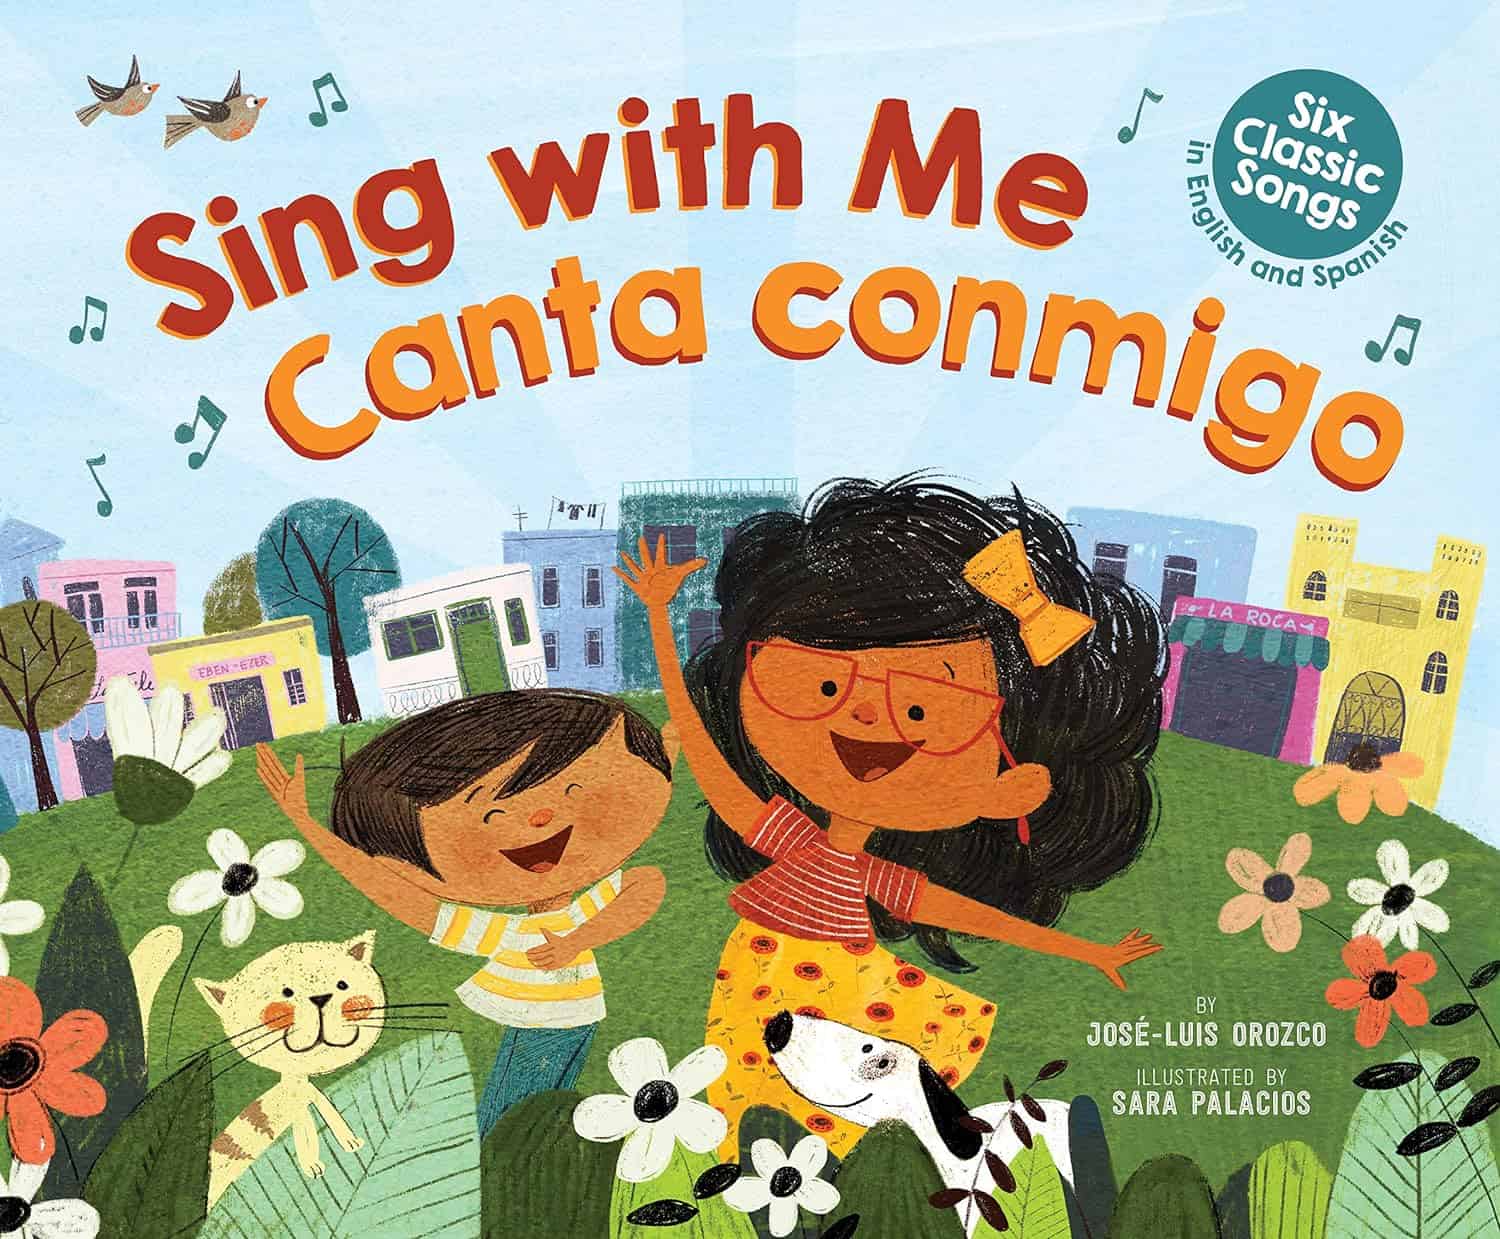 Sing With Me Canta conmigo by Jose-Luis Orozco